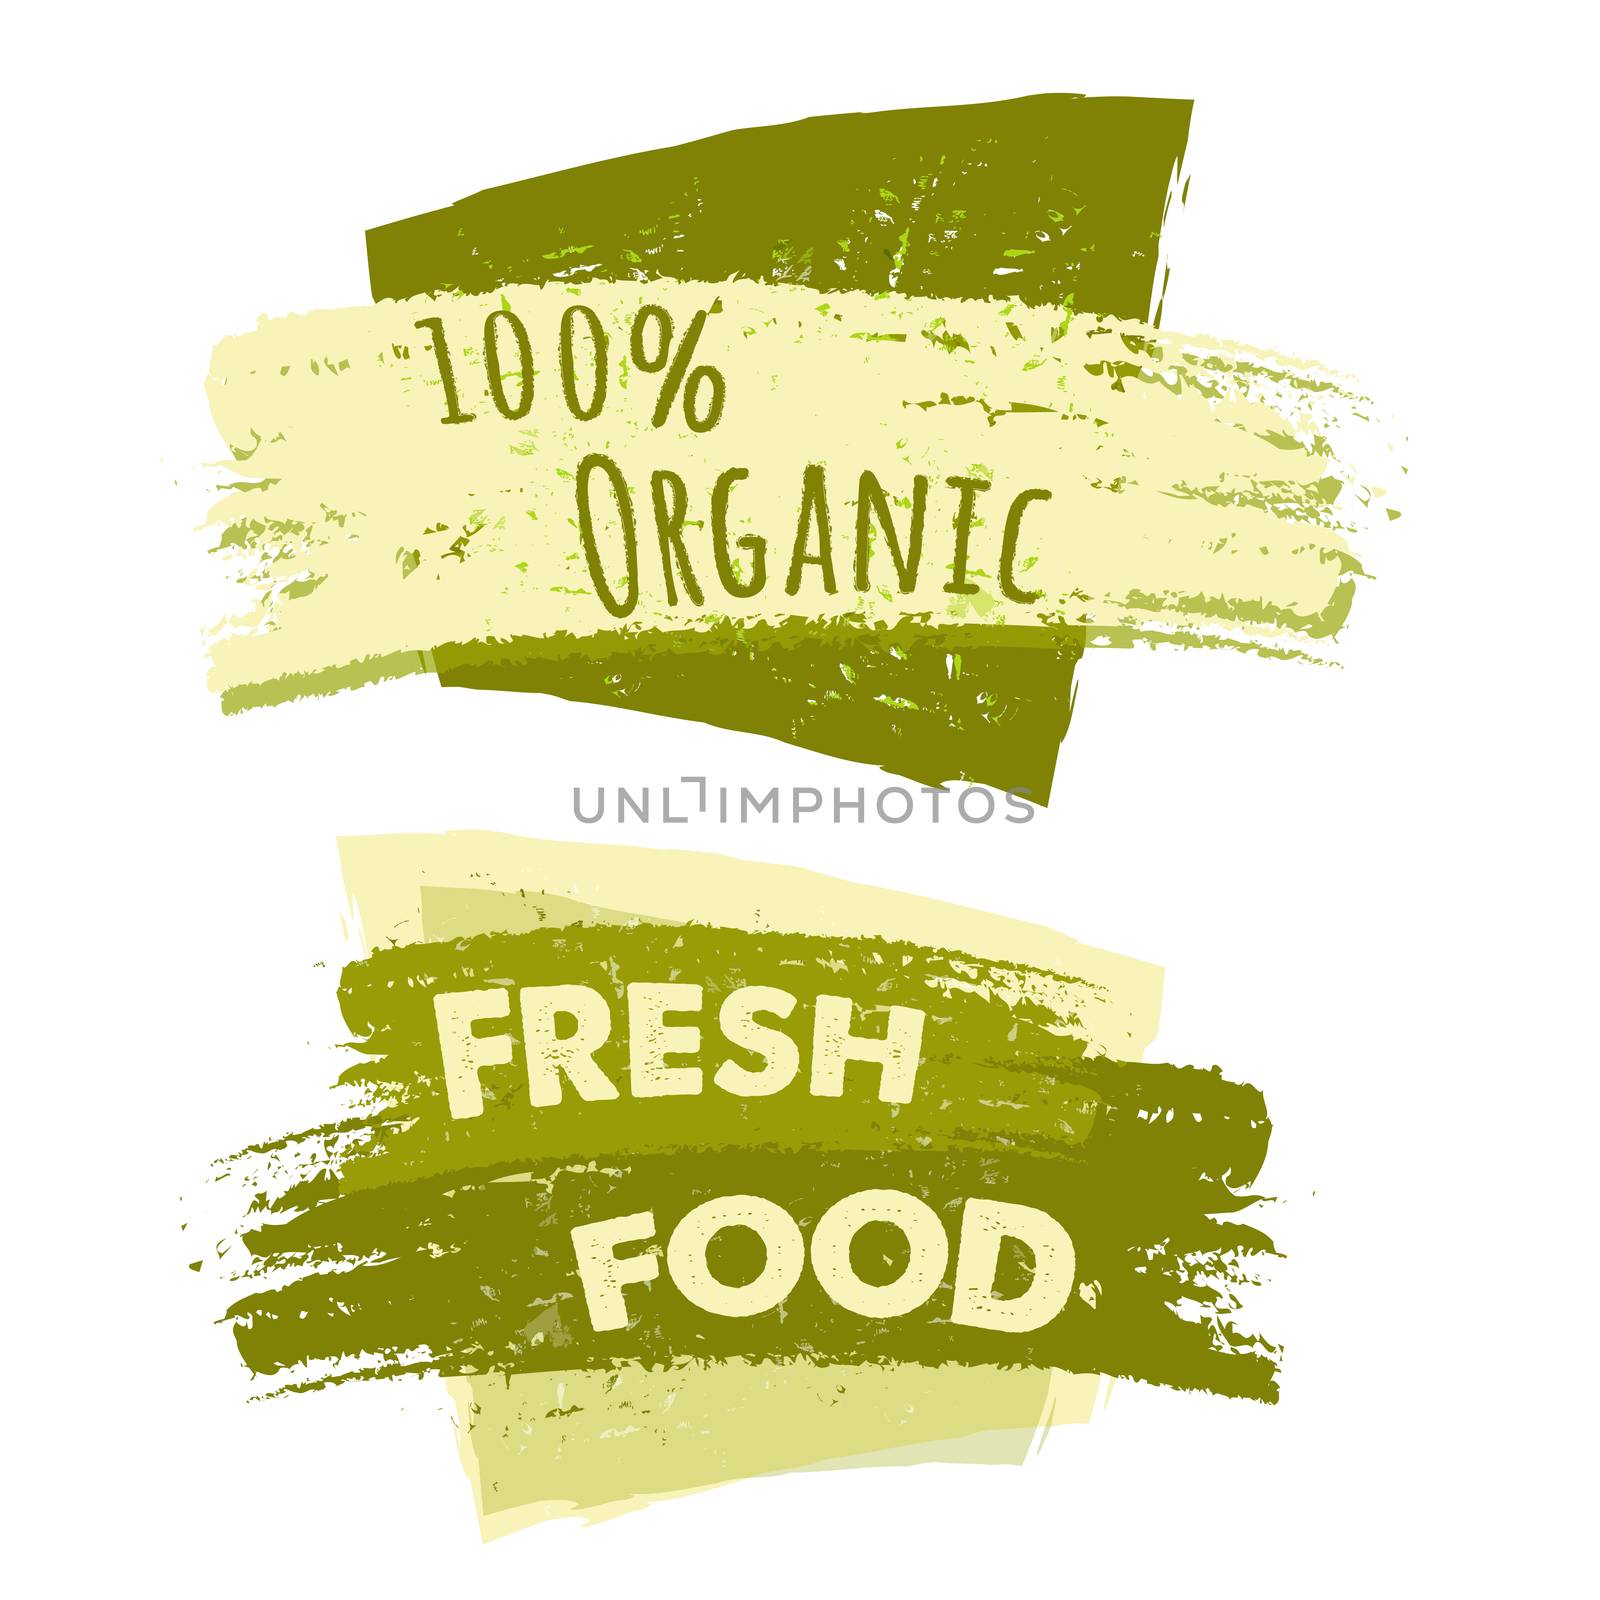 100 percent organic and fresh food, two drawn banners by marinini